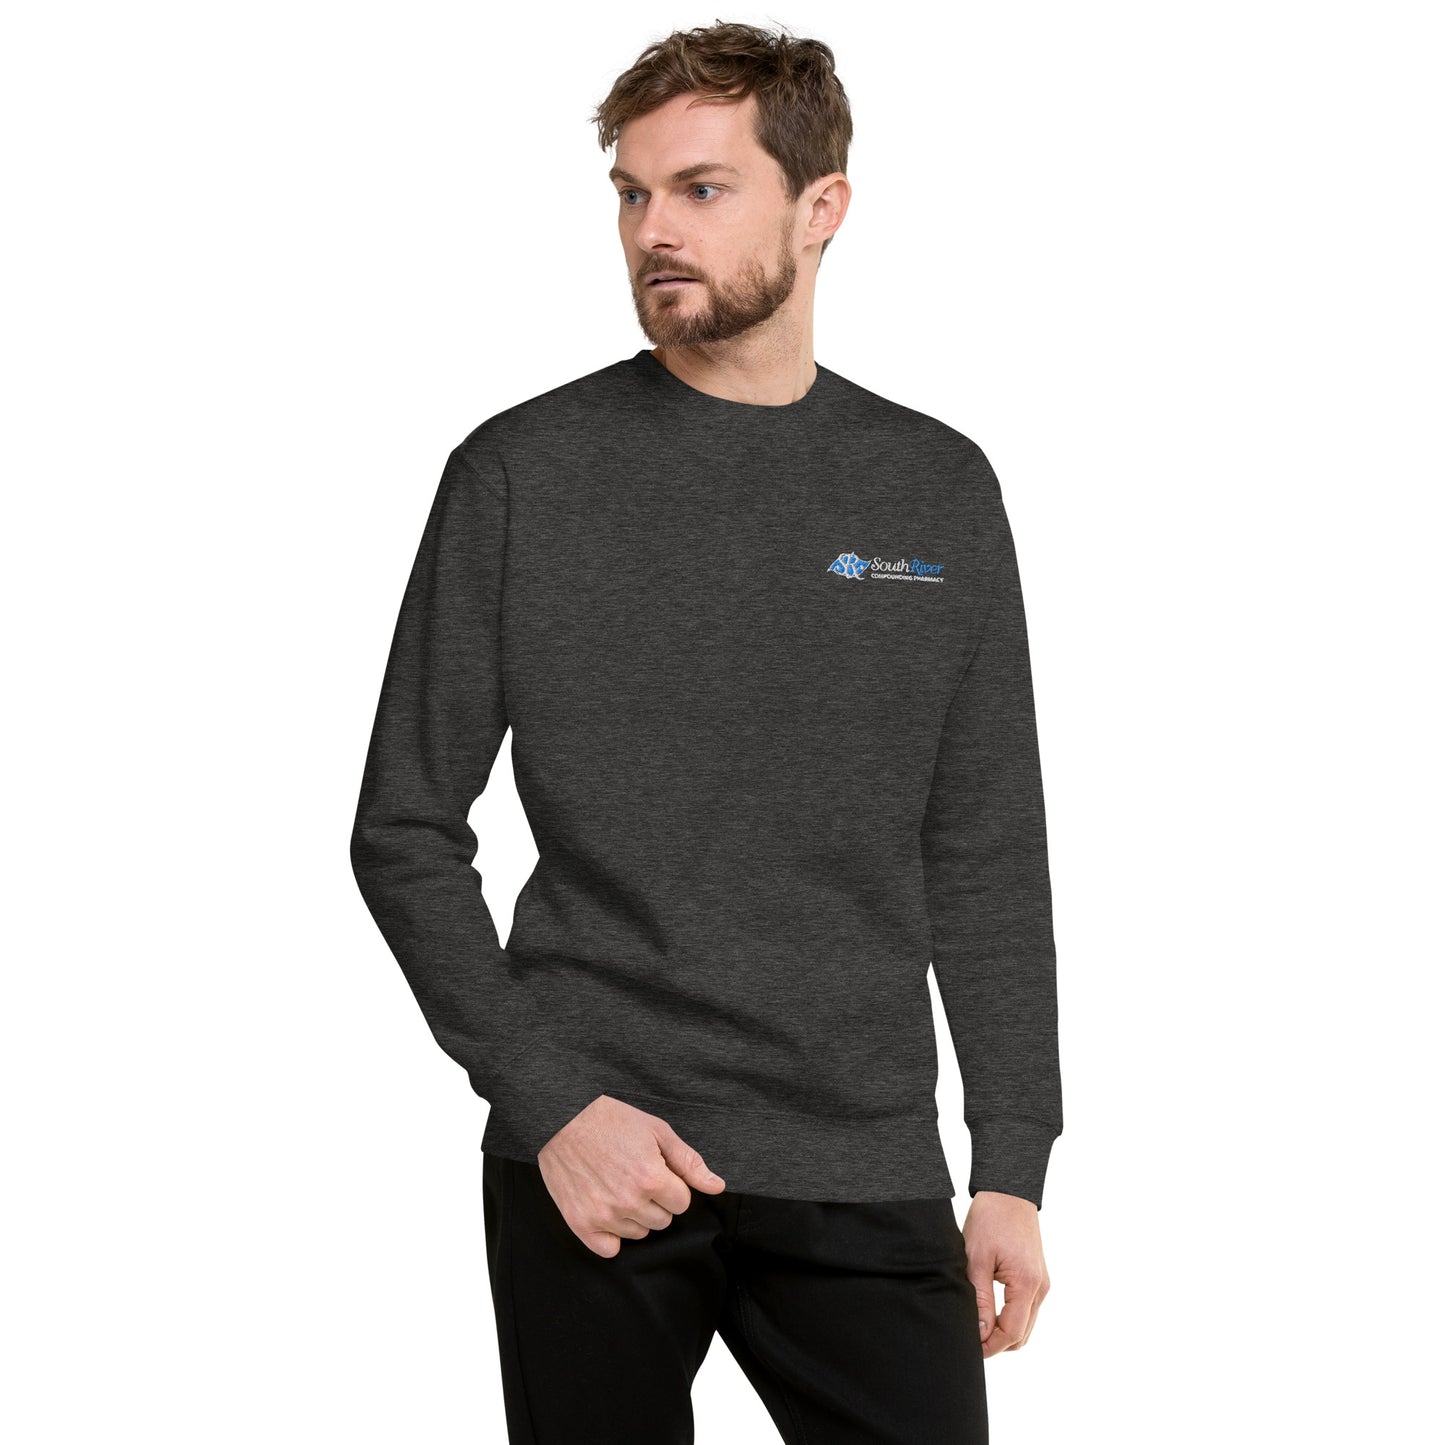 Unisex Premium Sweatshirt (fitted cut) - South River